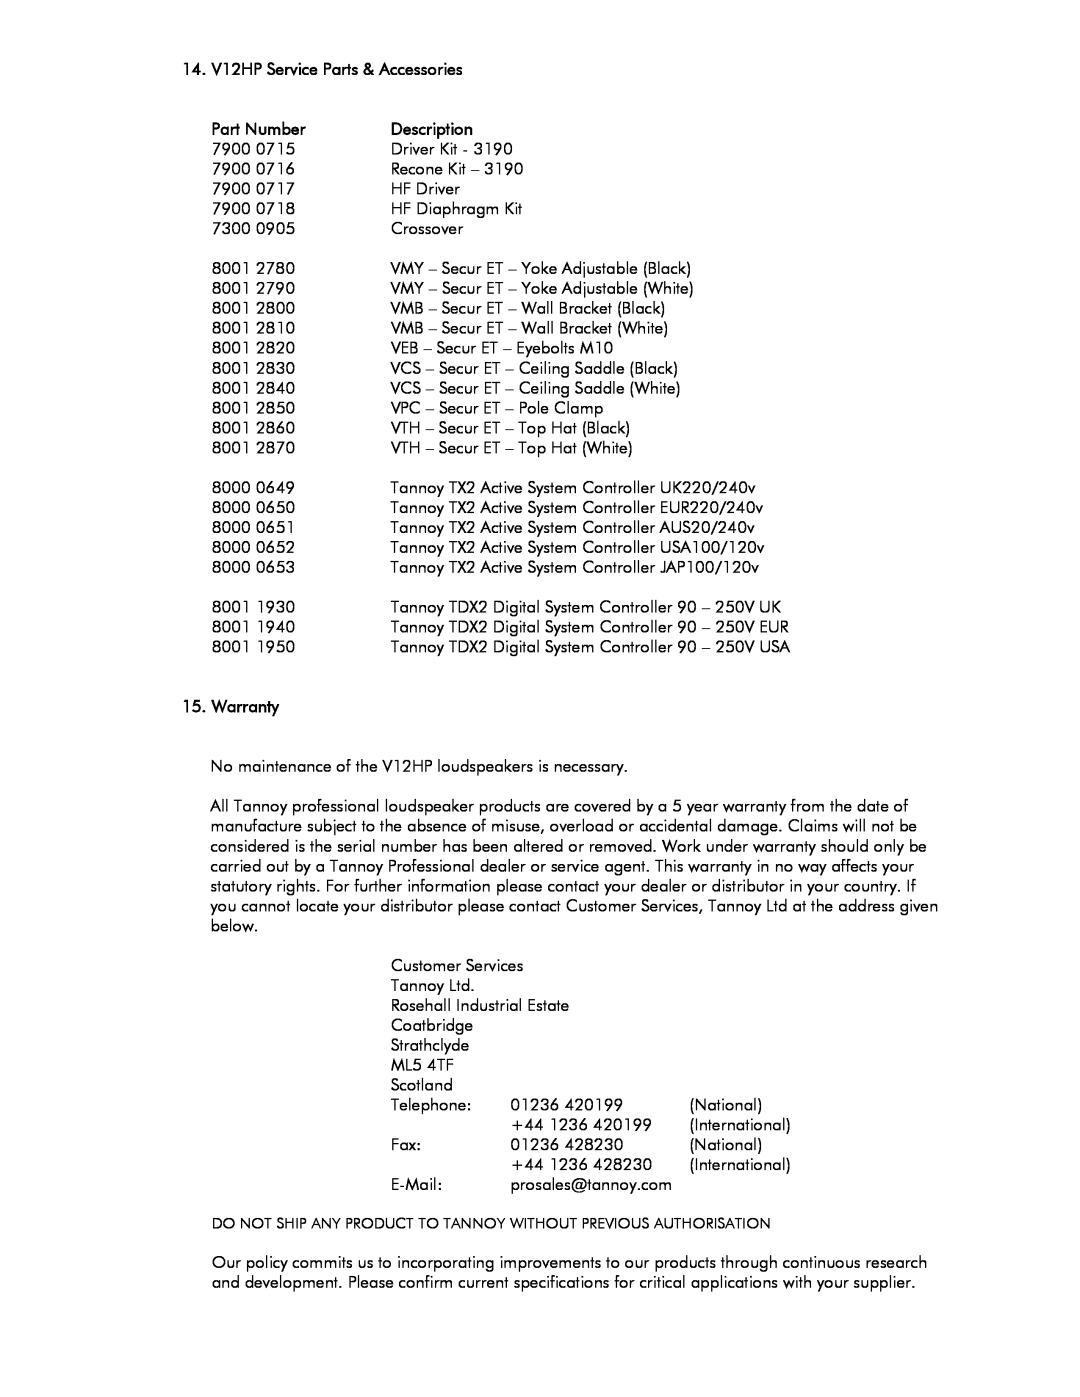 Tannoy user manual 14. V12HP Service Parts & Accessories, Part Number, Description, Warranty 